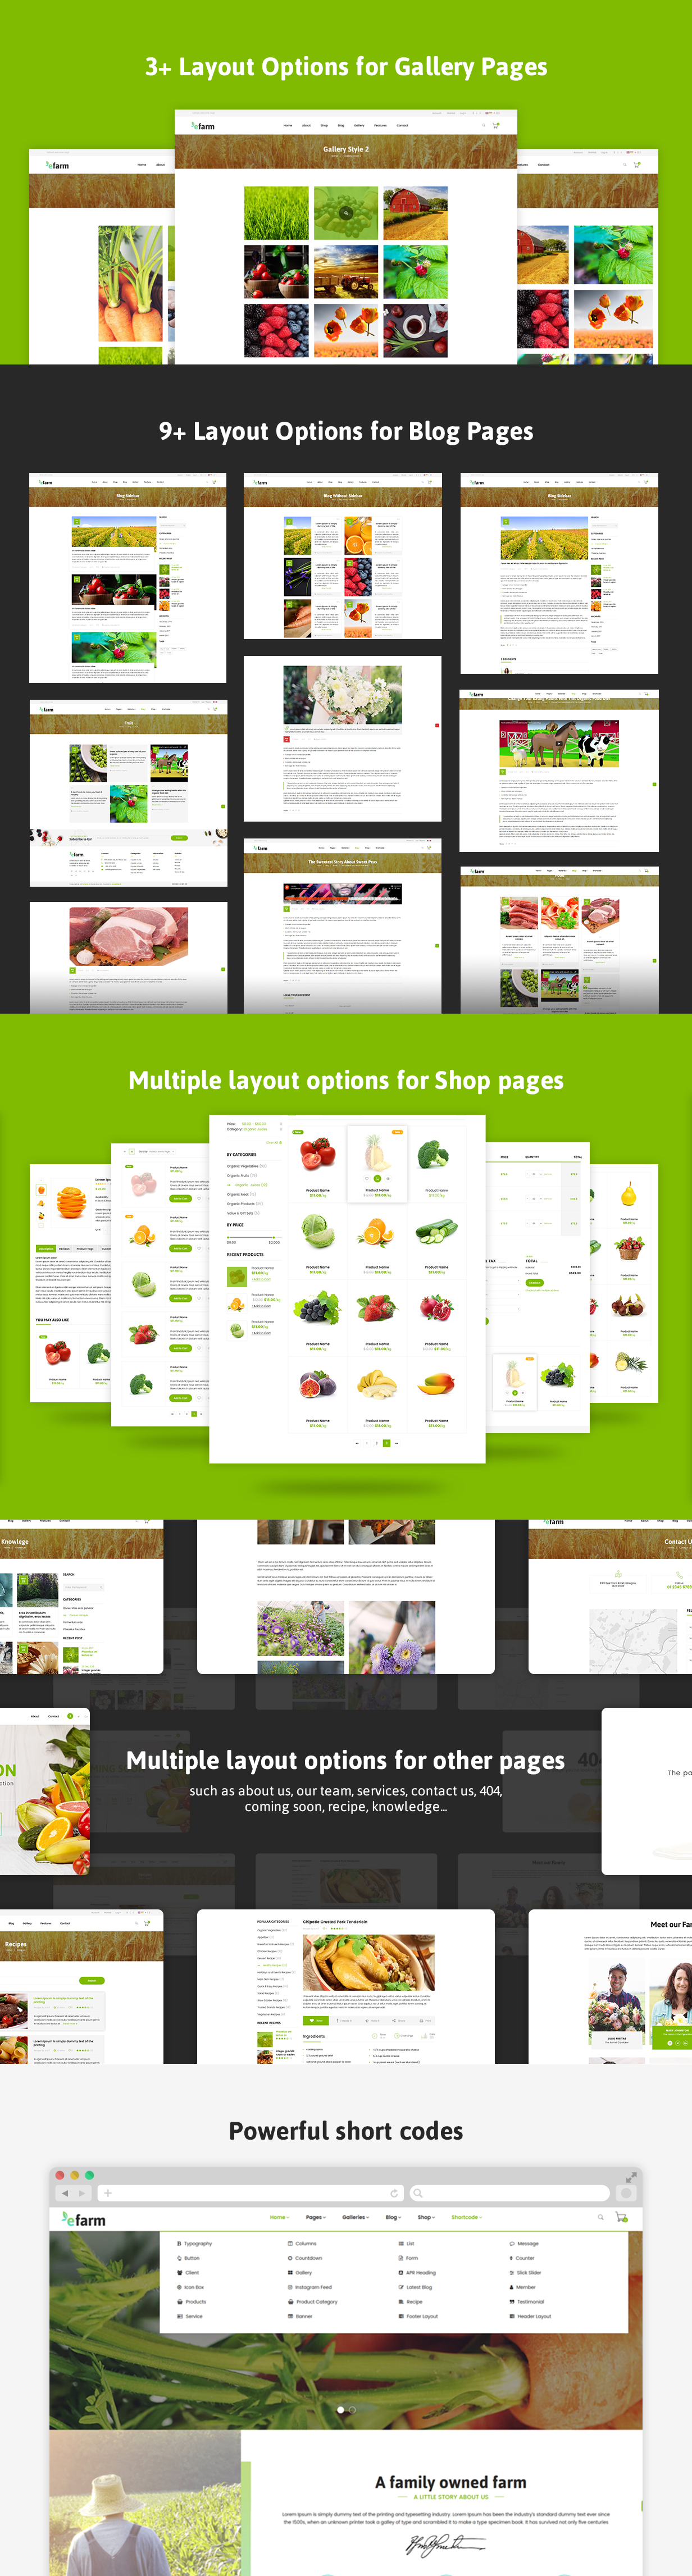 eFarm - A Multipurpose Food & Farm WordPress Theme - 9